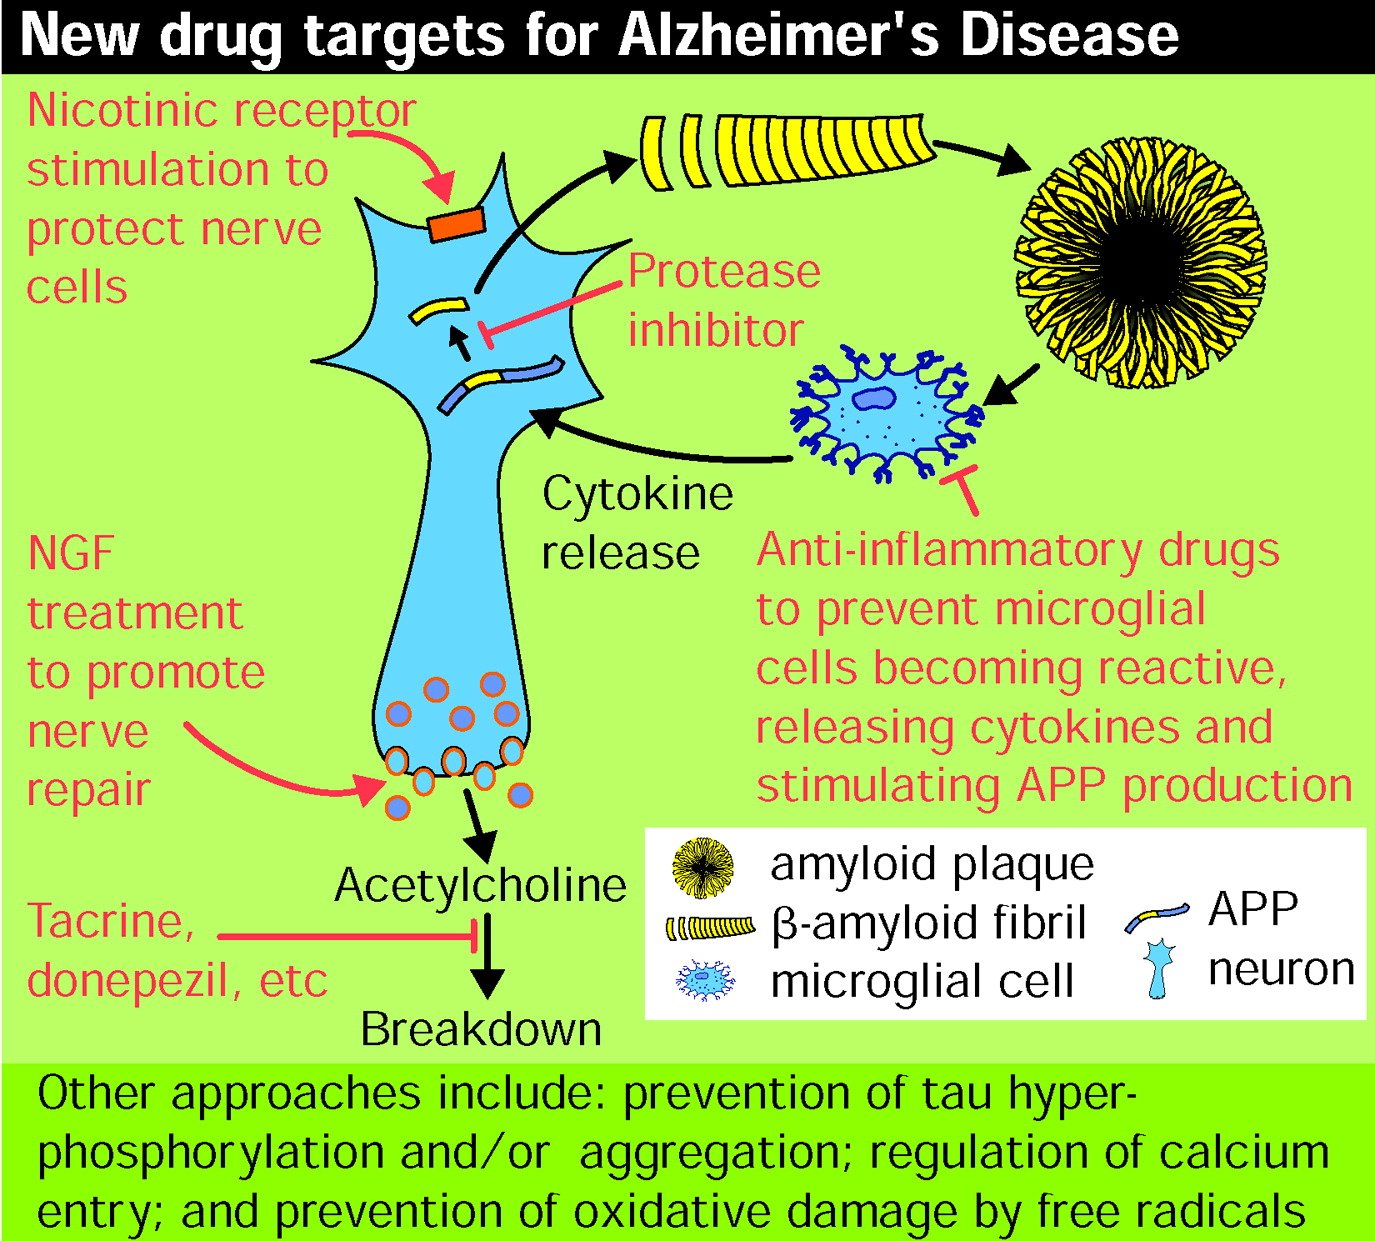 From mechanisms to drugs in Alzheimer